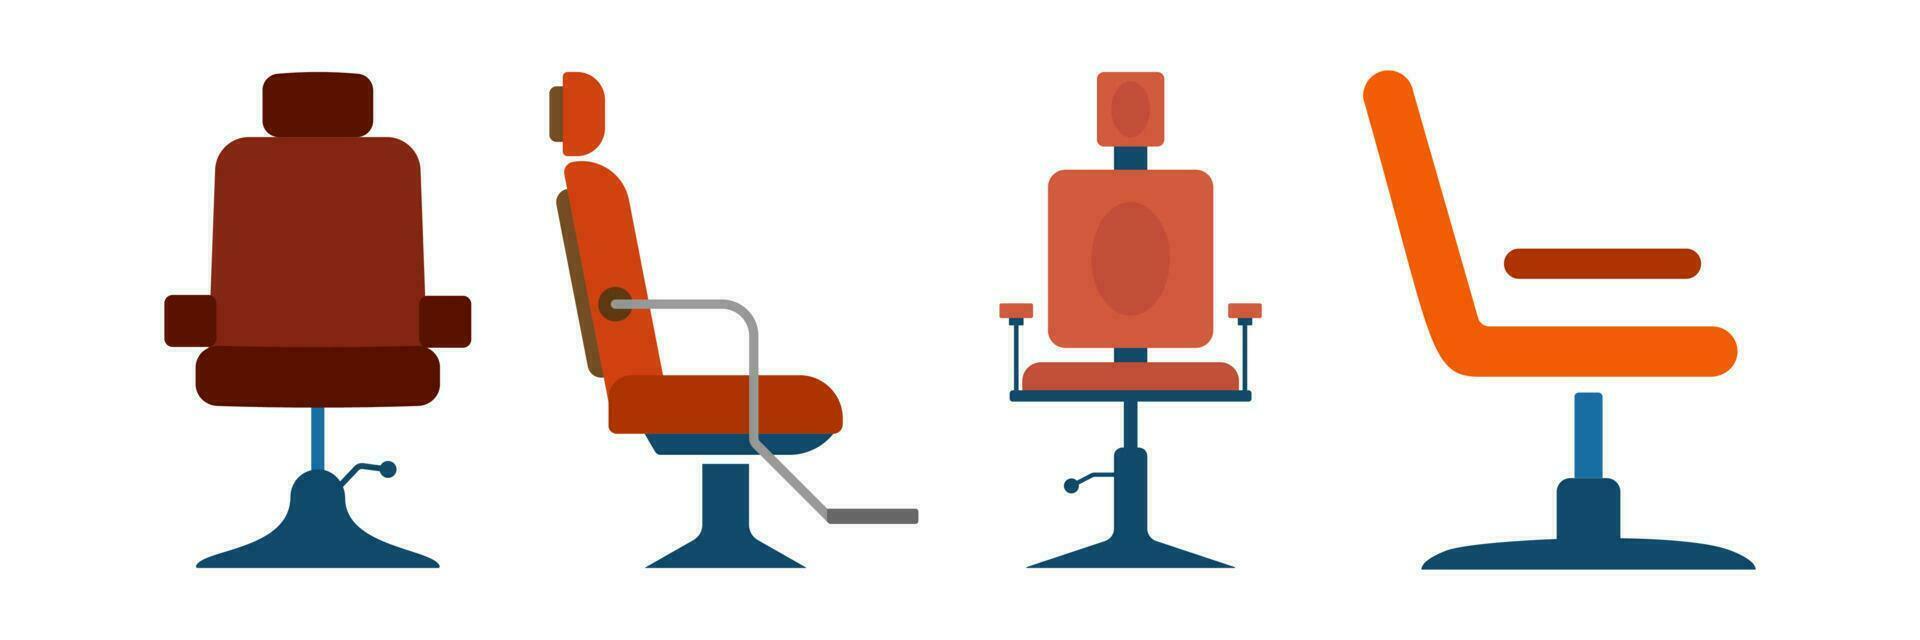 peluquería o peluquería silla lado vista, plano vector ilustración o icono colocar. barbería moderno equipo y mobiliario elemento para emblema o logo.